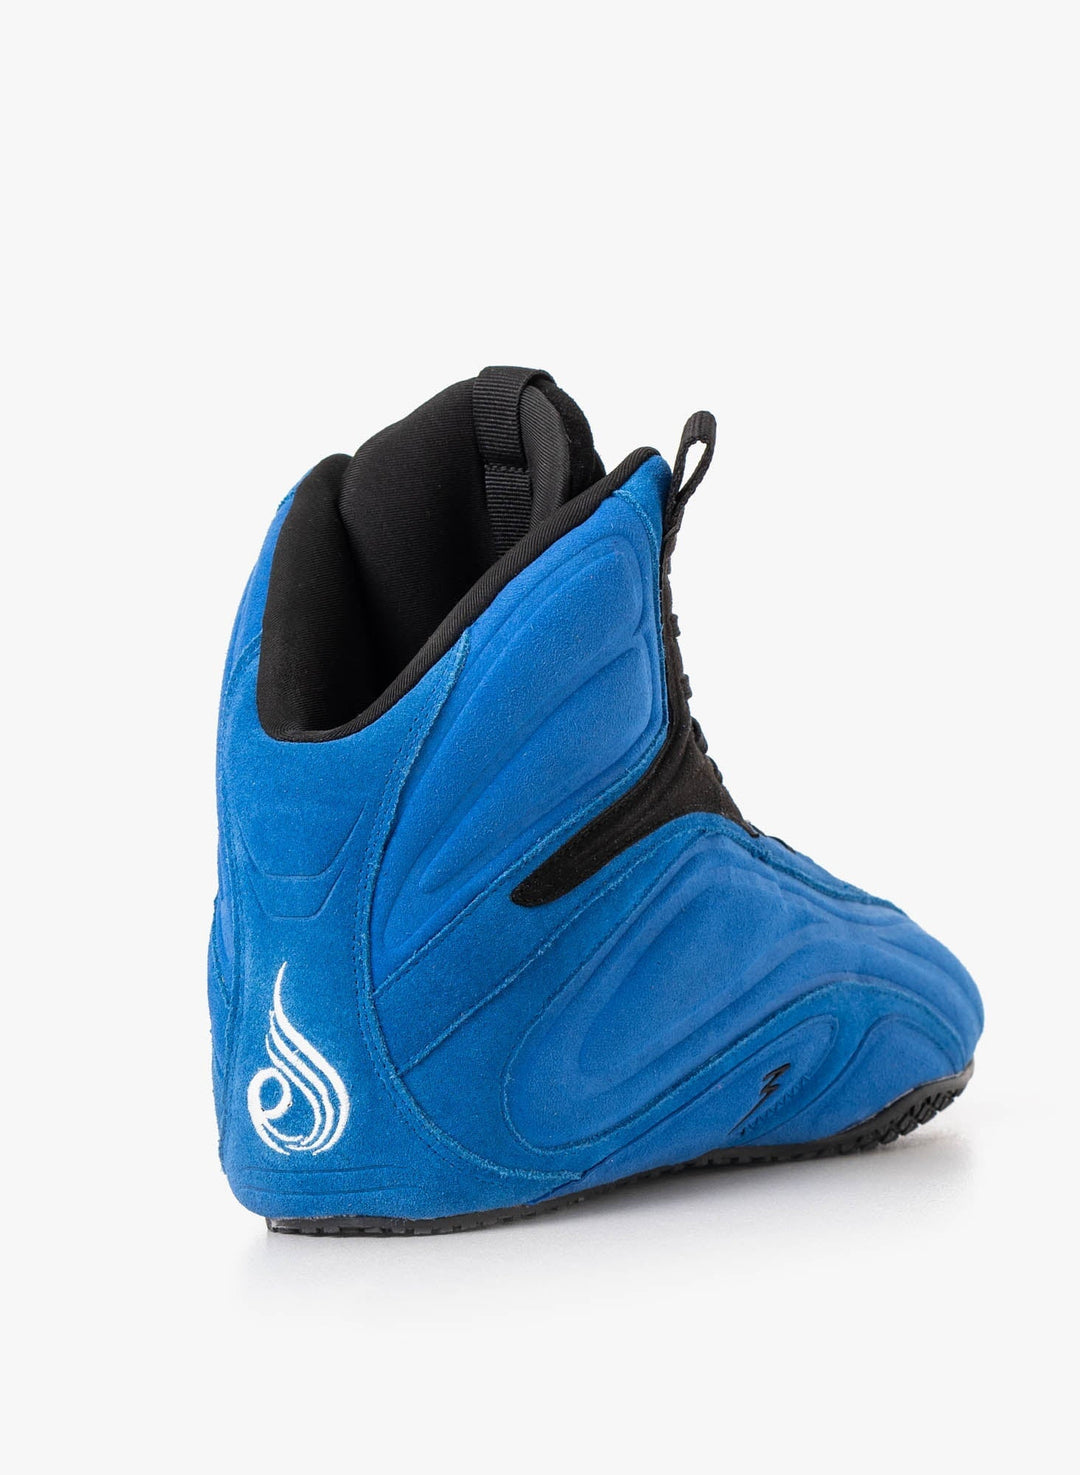 D-Mak 3 - Blue Shoes Ryderwear 